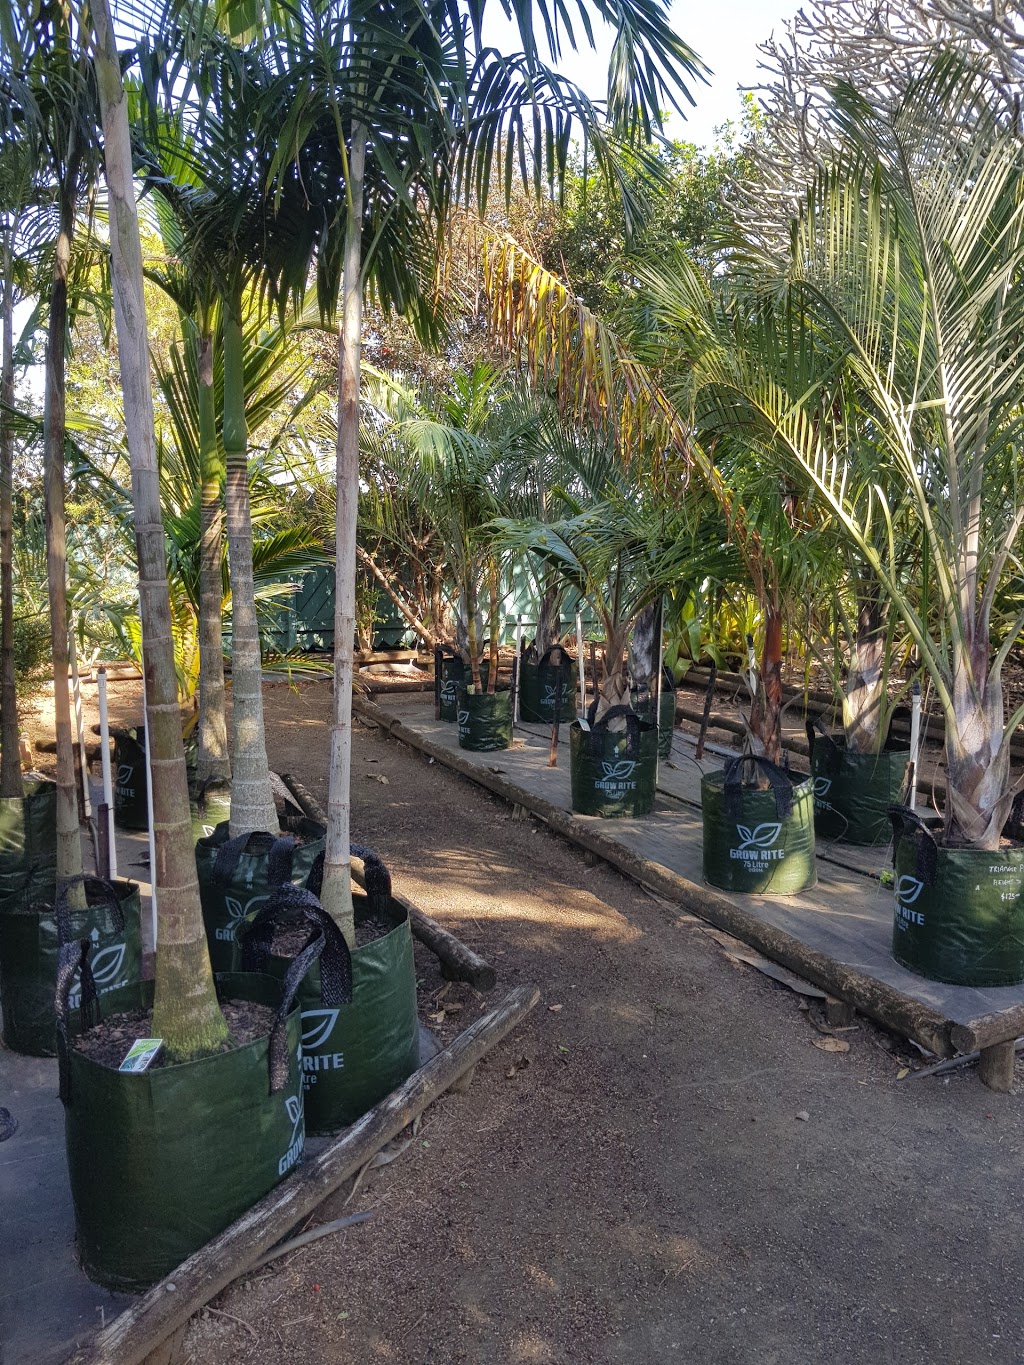 Tropical Paradise Nursery | 67 Bells Rd, Woongarra QLD 4670, Australia | Phone: (07) 4151 8036